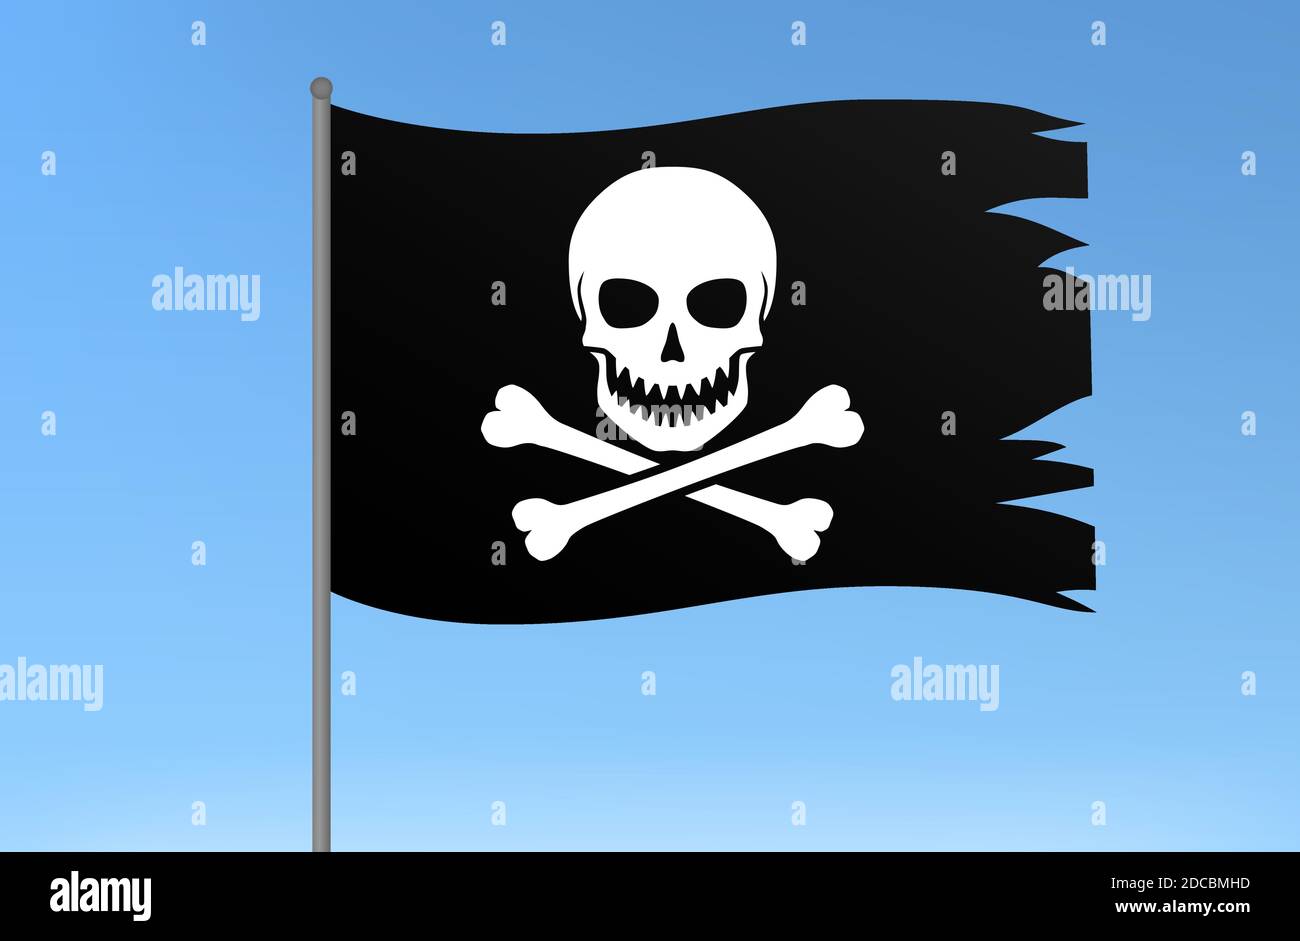 Black pirate flag with evil sharp teeth skull and crossbones symbol jolly roger vector illustration Stock Vector